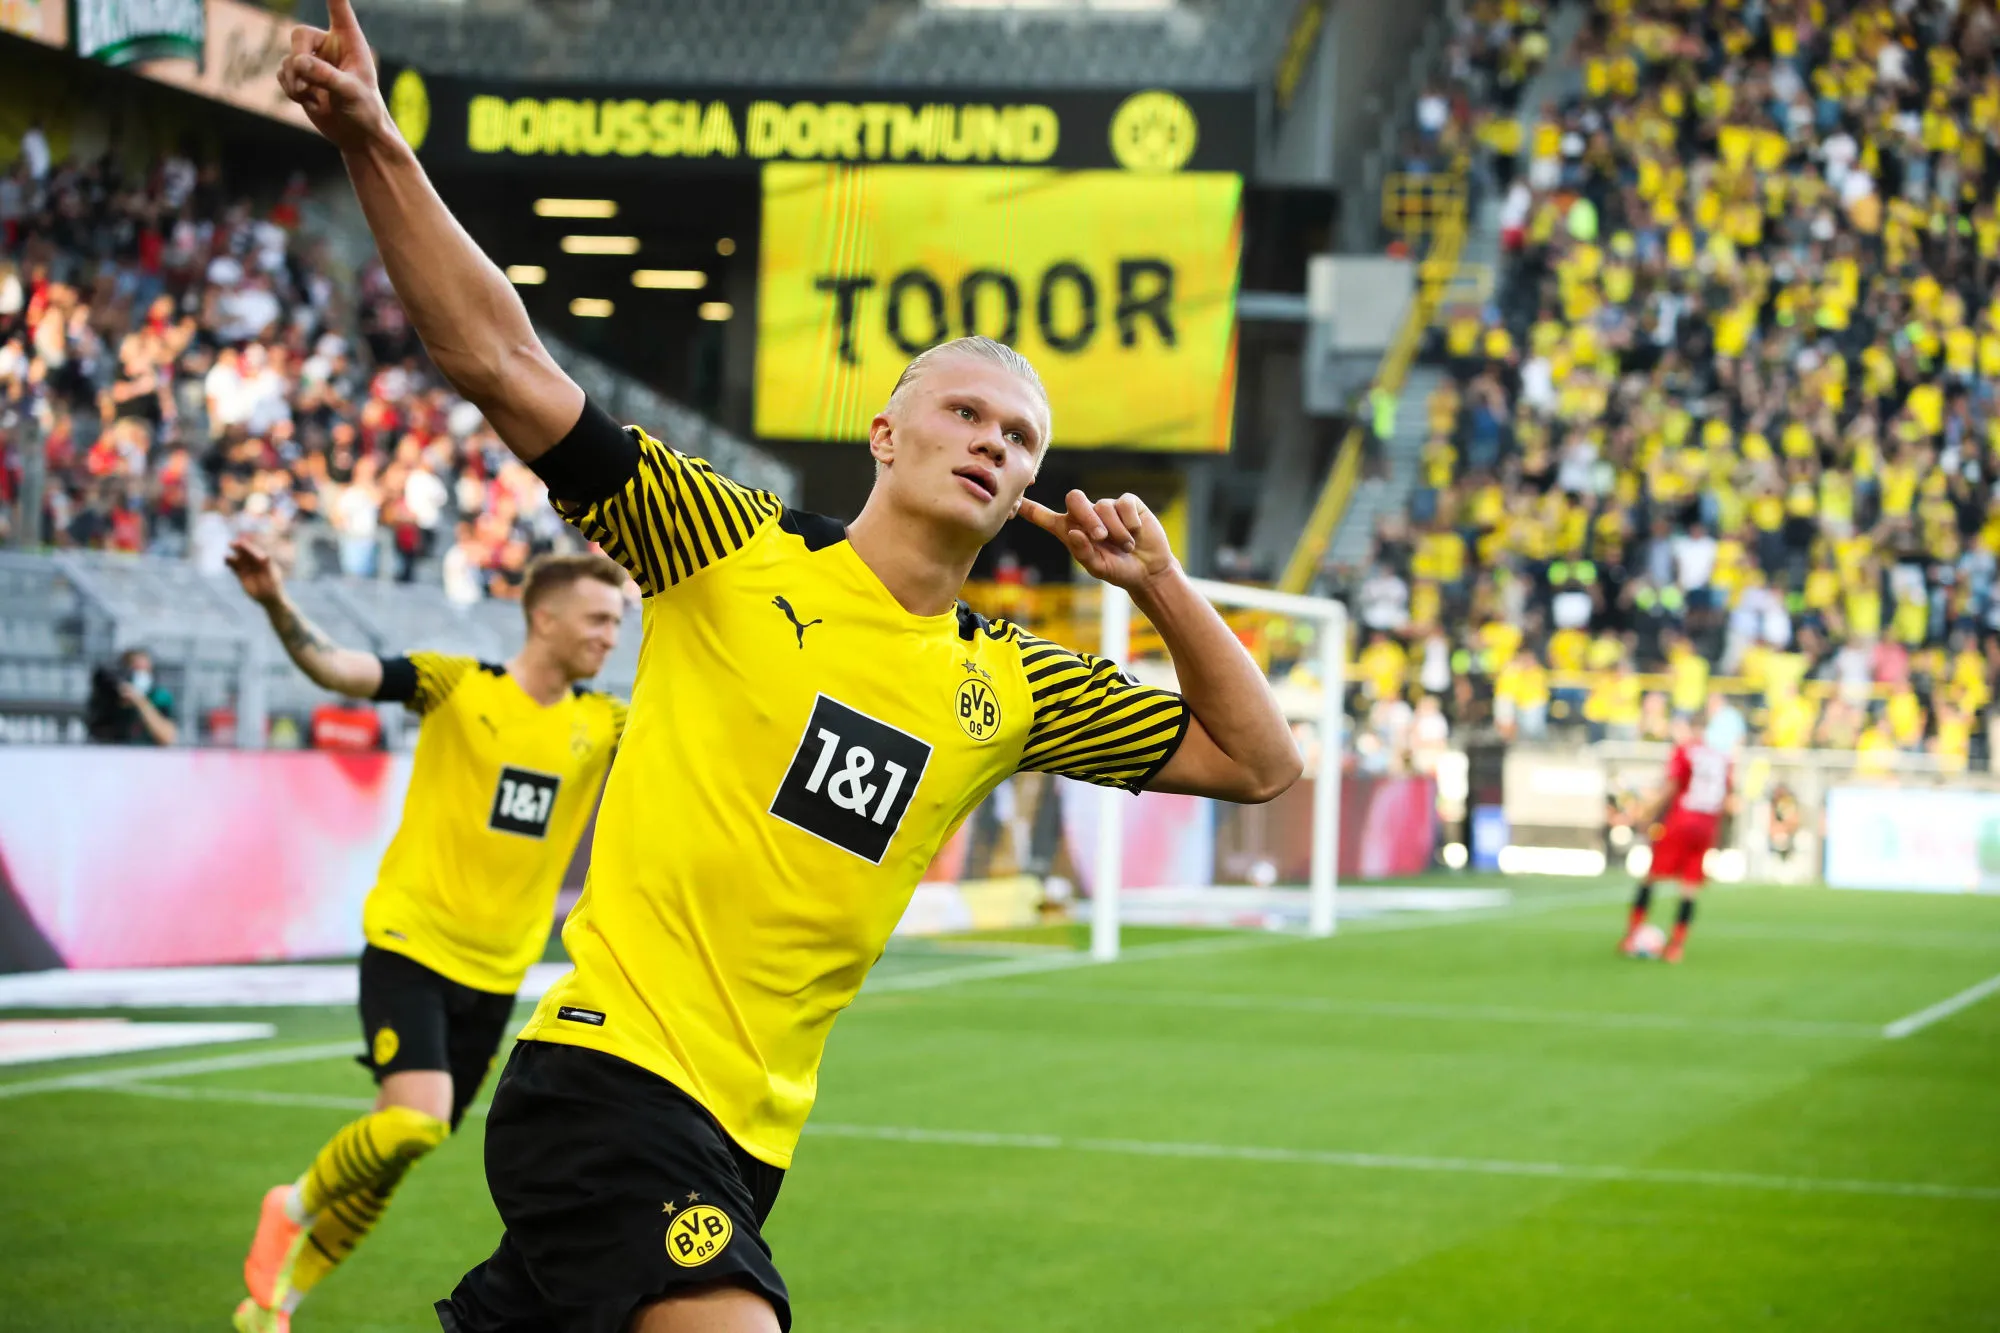 Pronostic Francfort Dortmund : Analyse, cotes et prono du match de Bundesliga